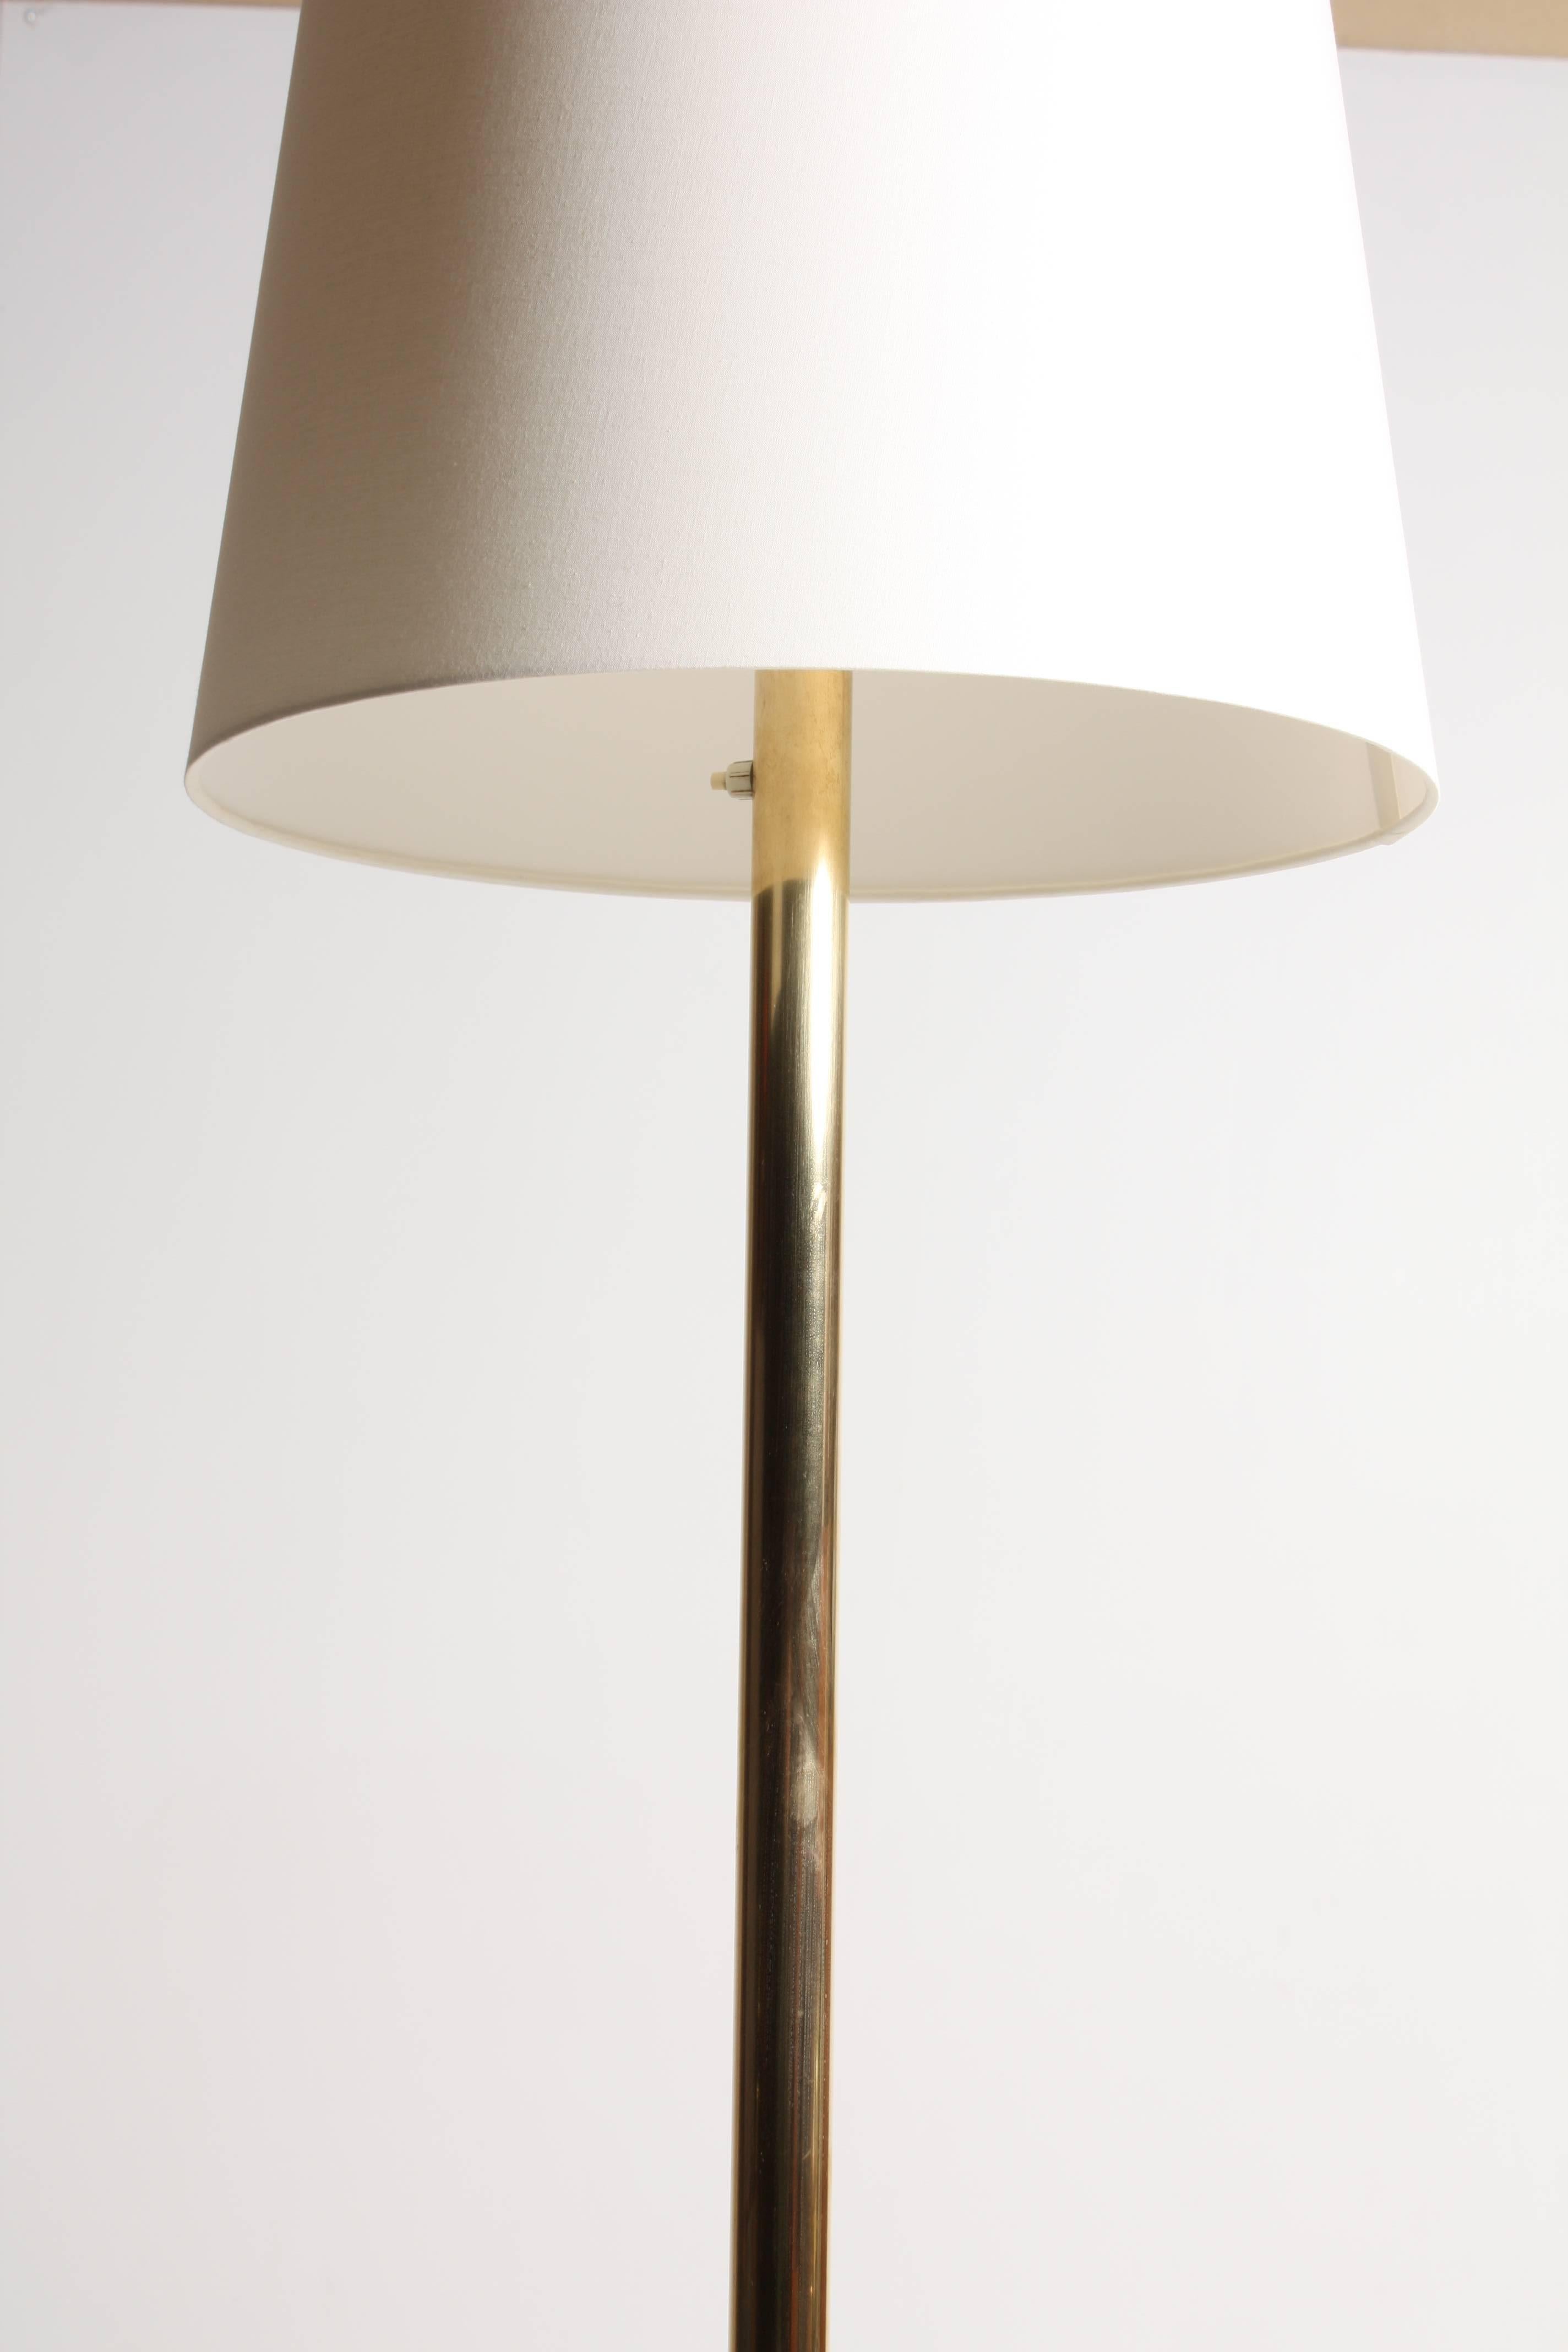 Mid-20th Century Danish Brass Floor Lamp from the 1940s